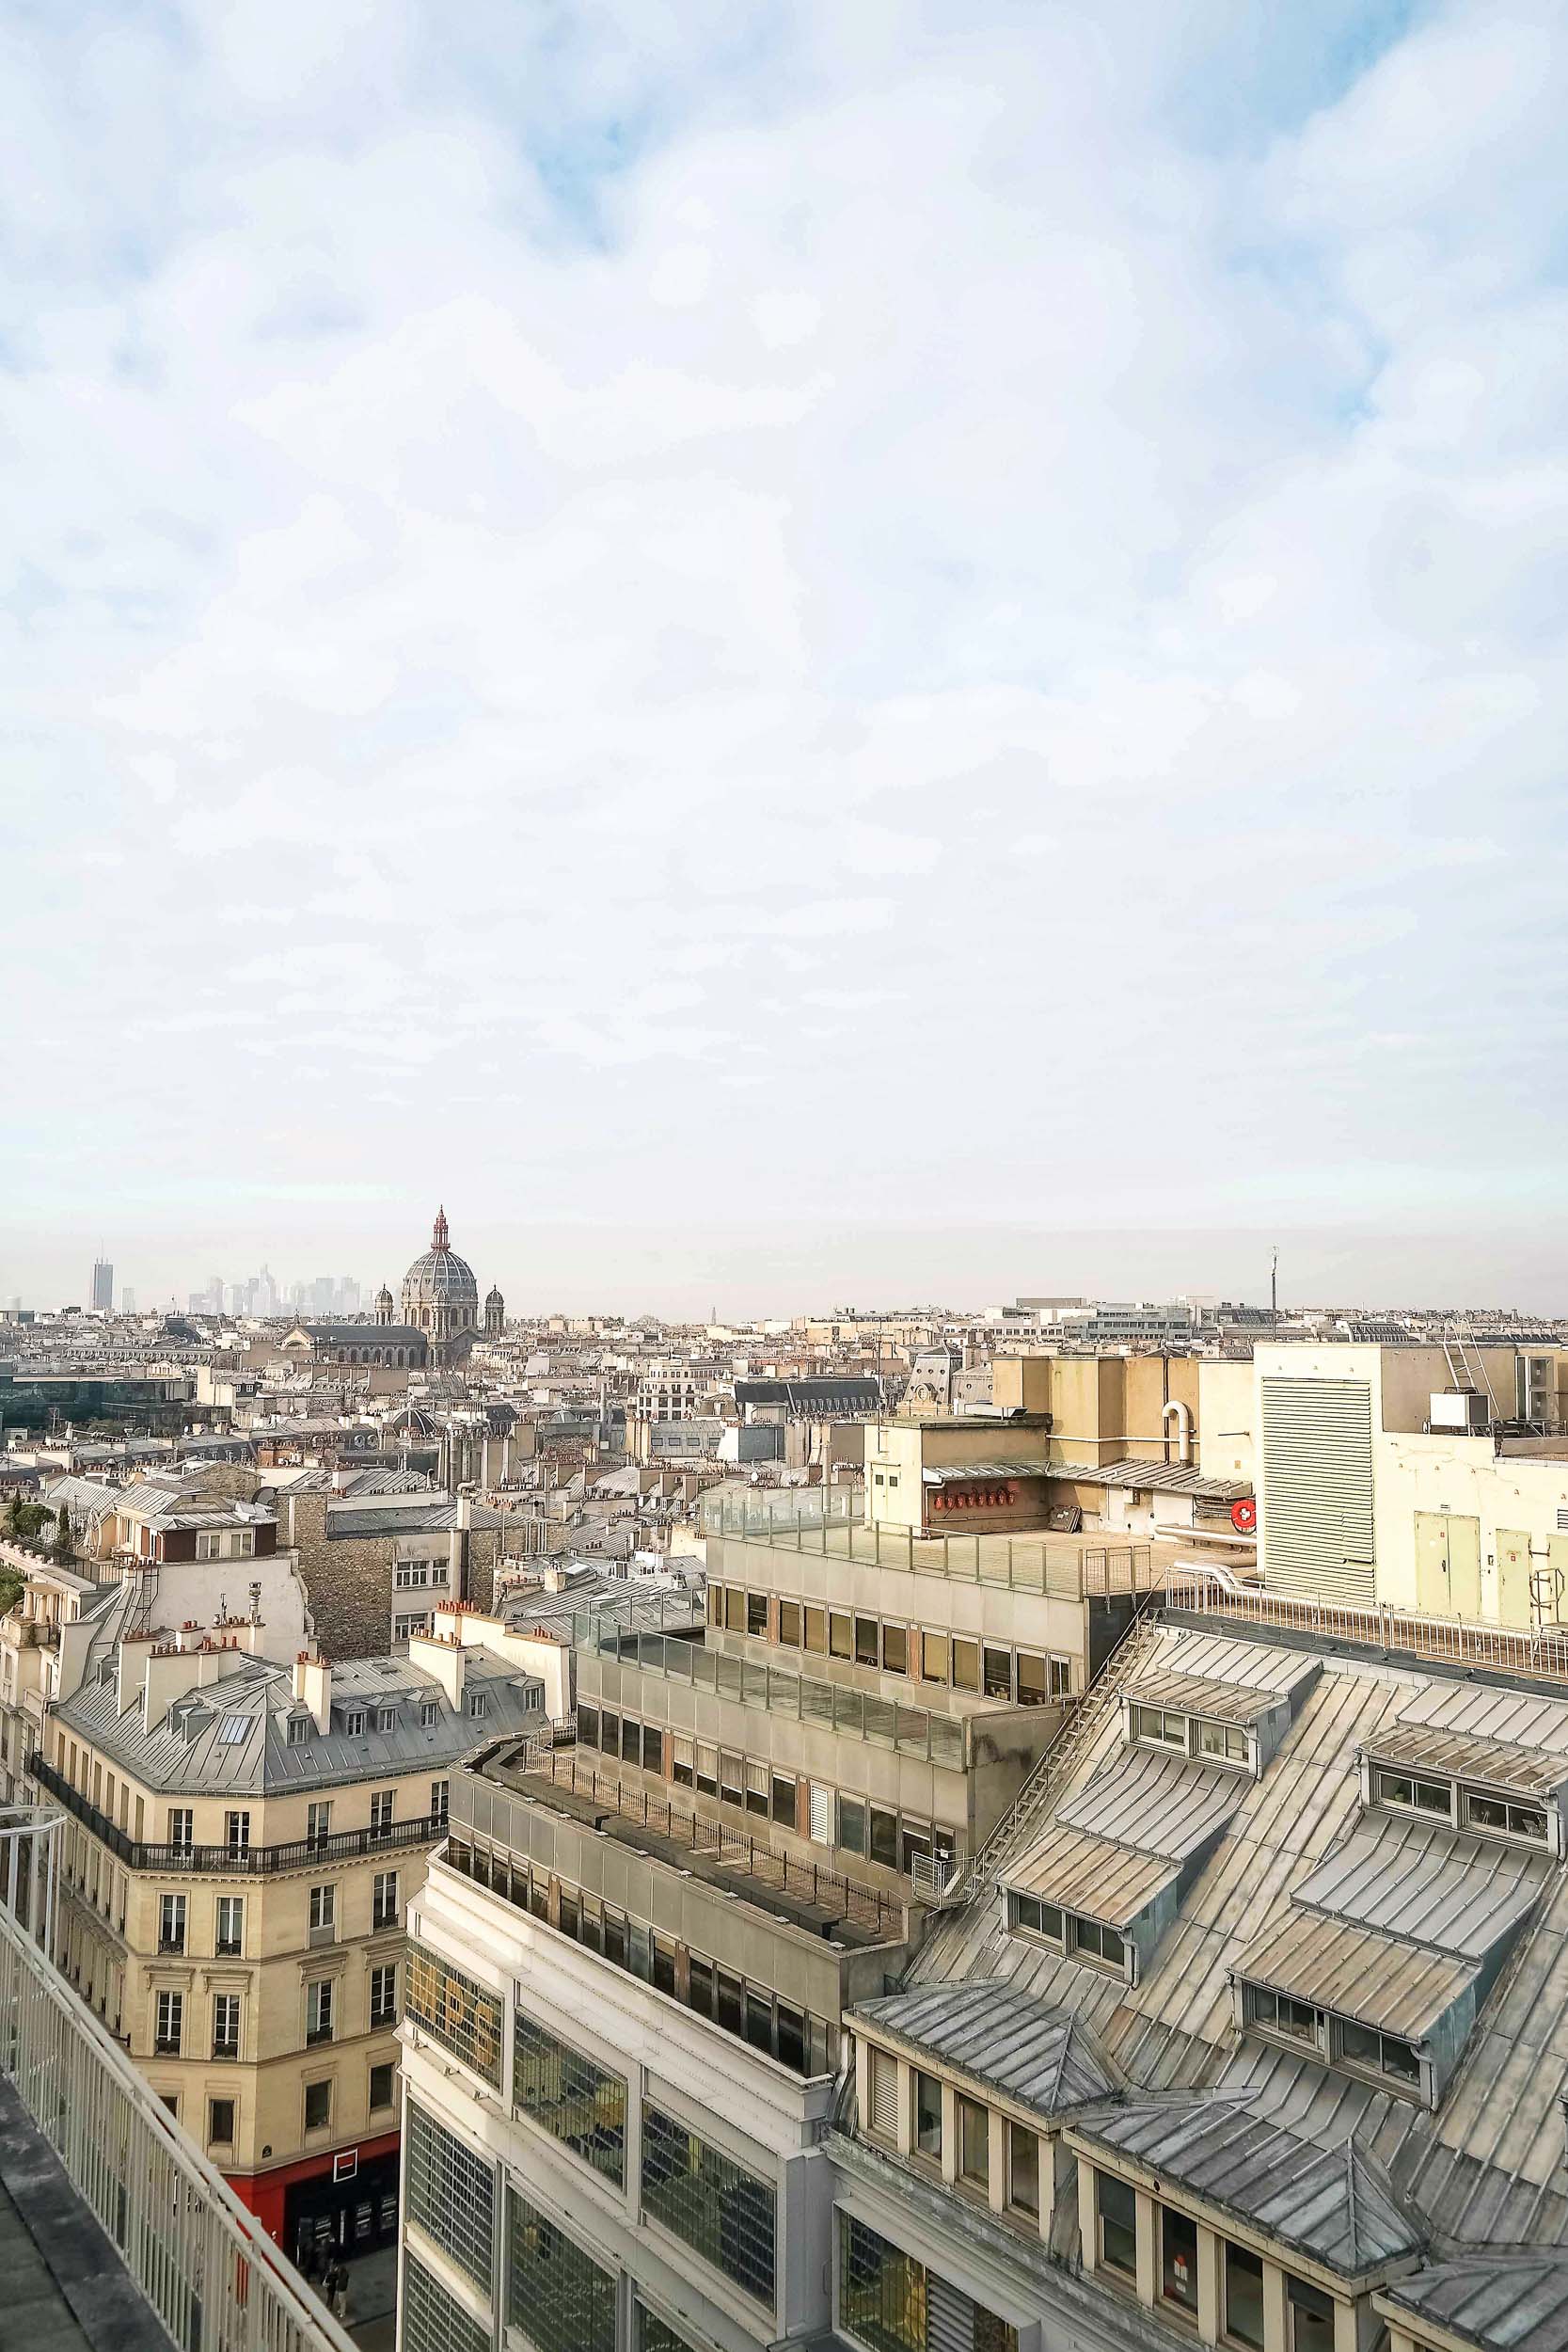 Clear skies and views of Paris in December